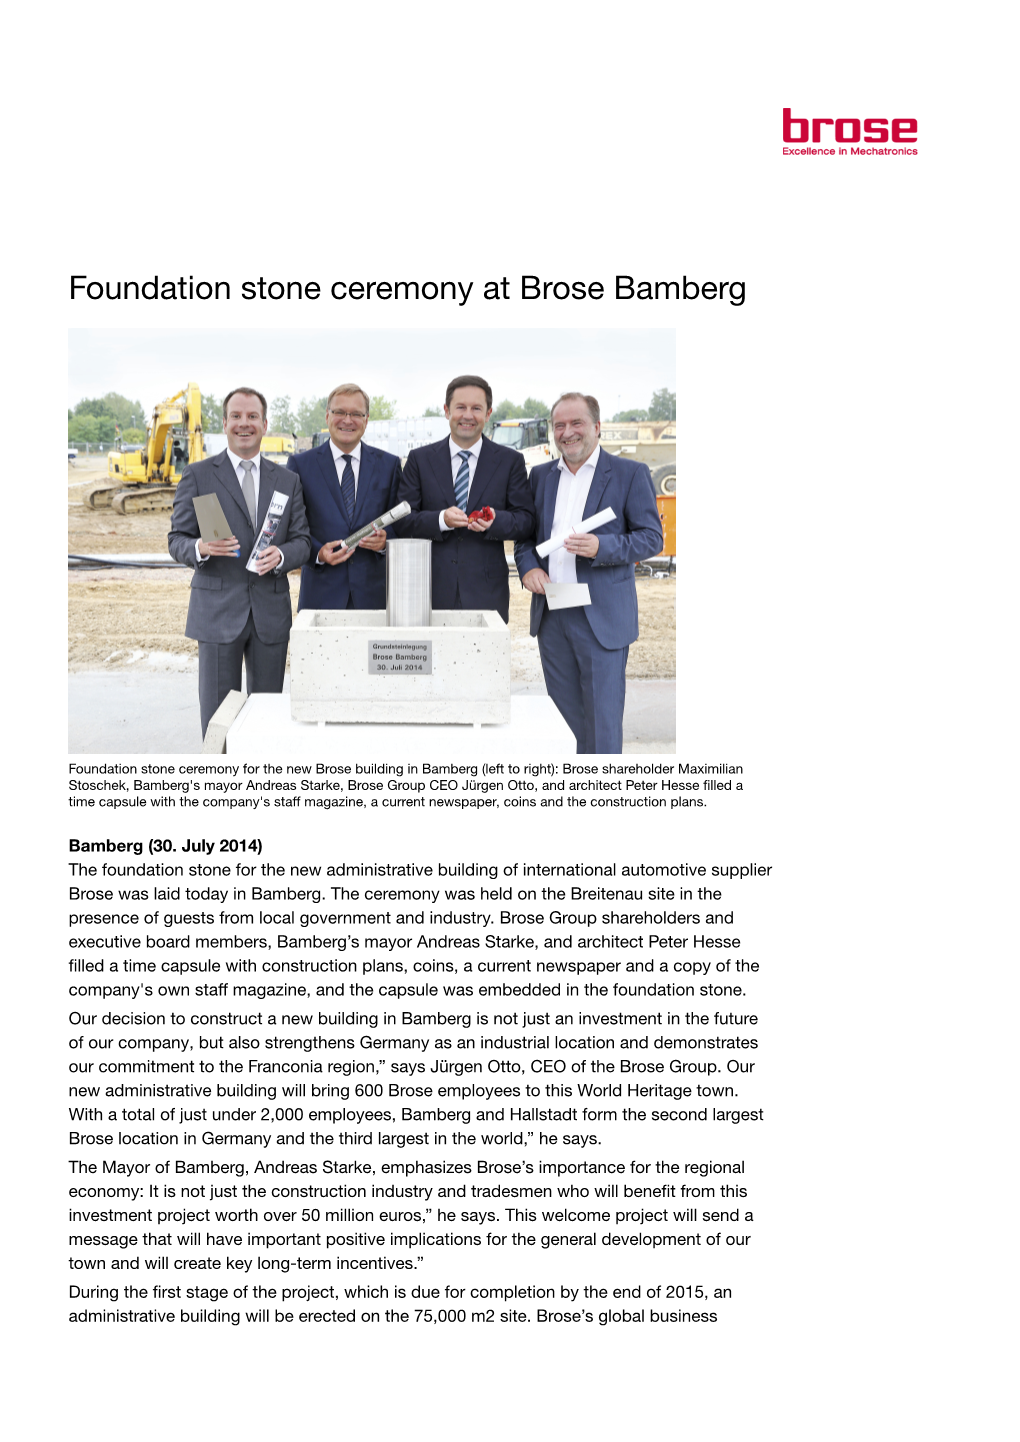 Foundation Stone Ceremony at Brose Bamberg